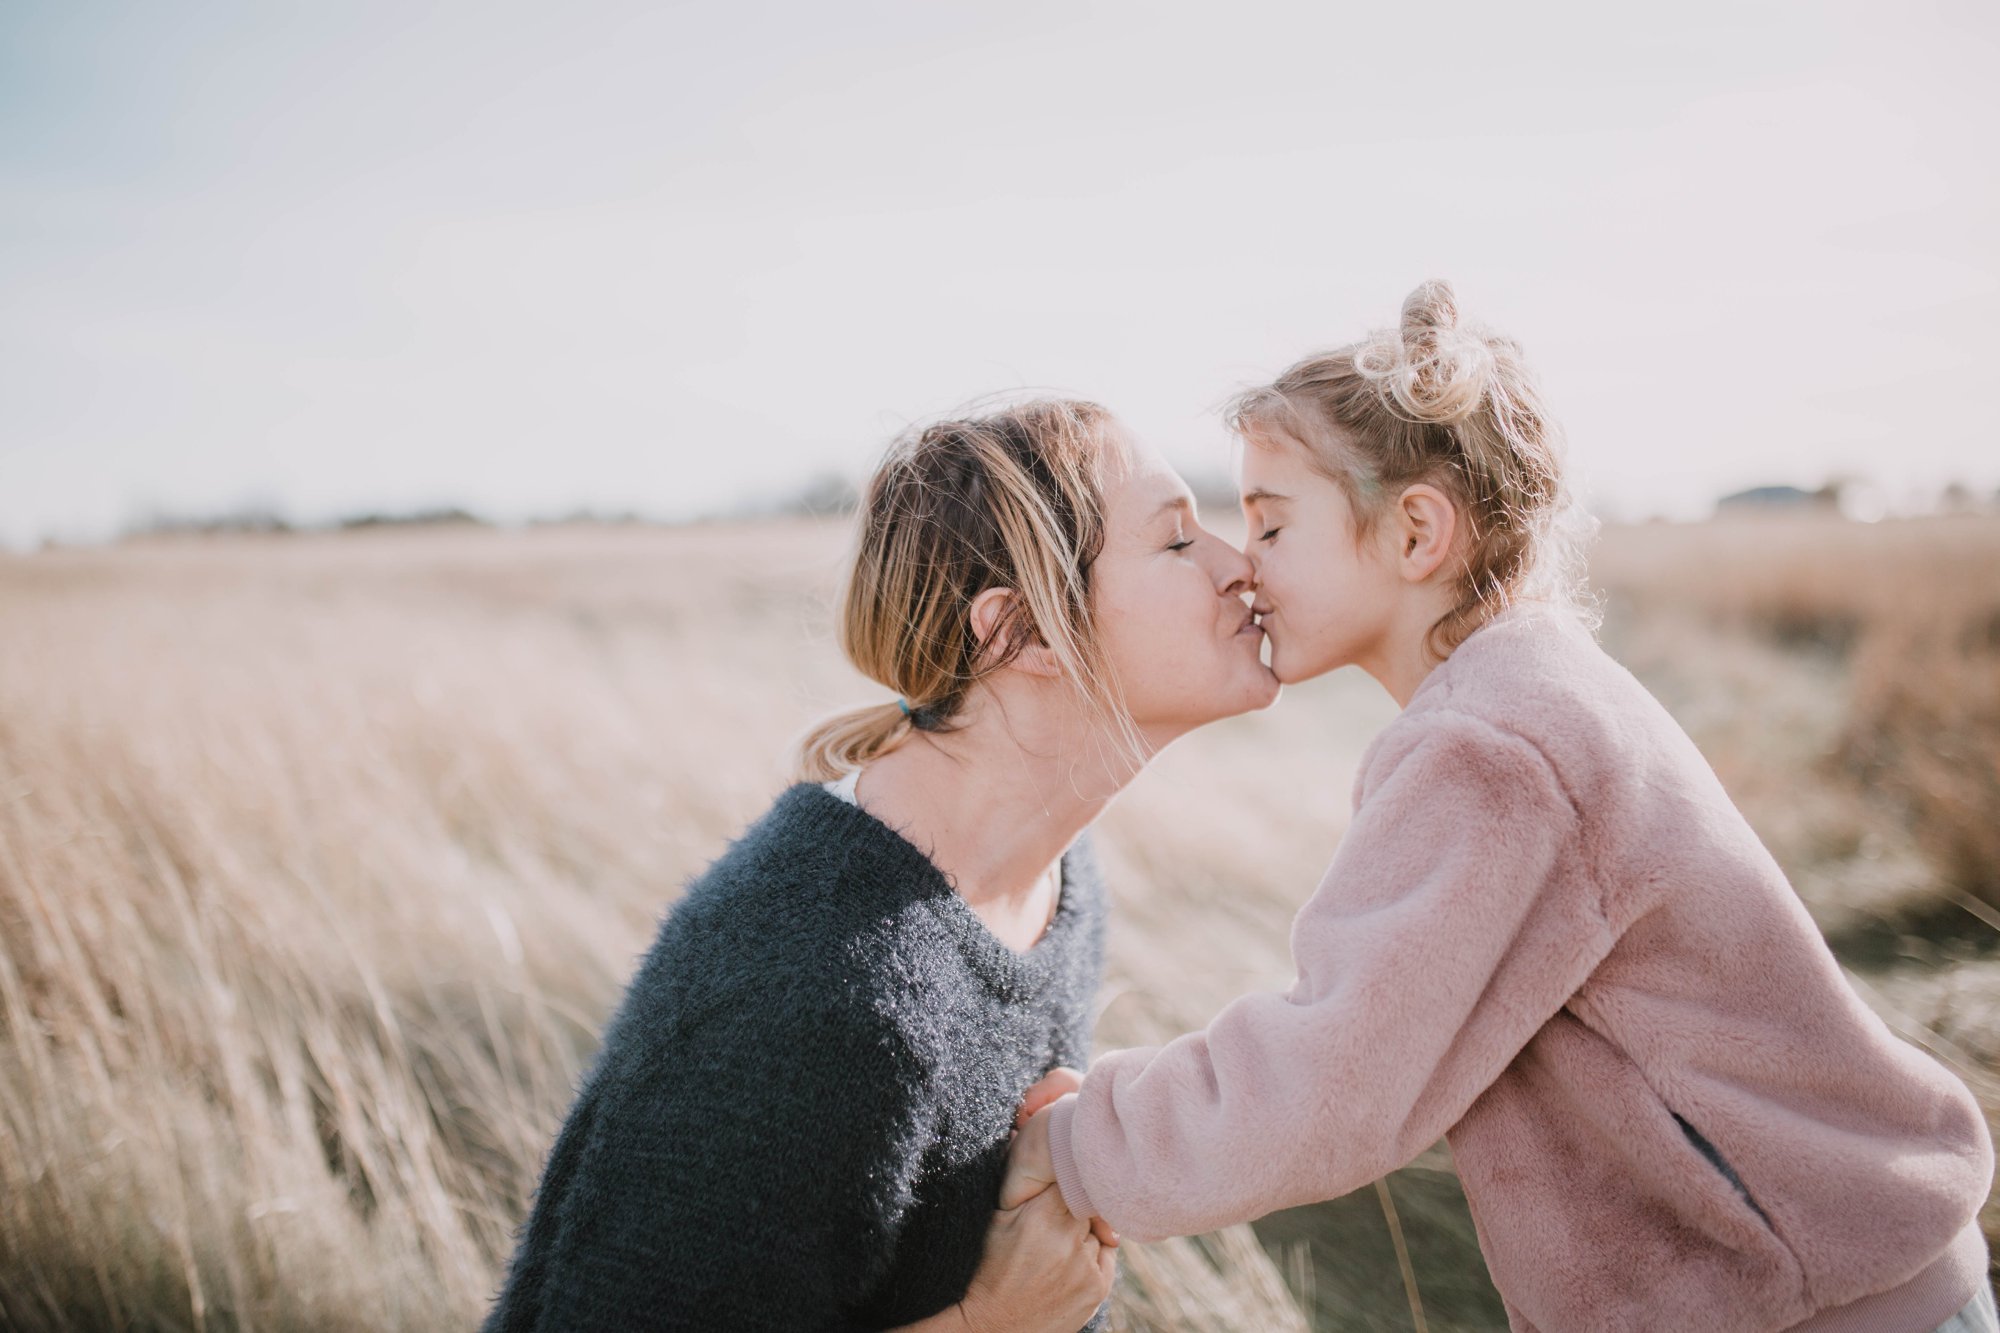 Brendtro family - mom kisses daughter.